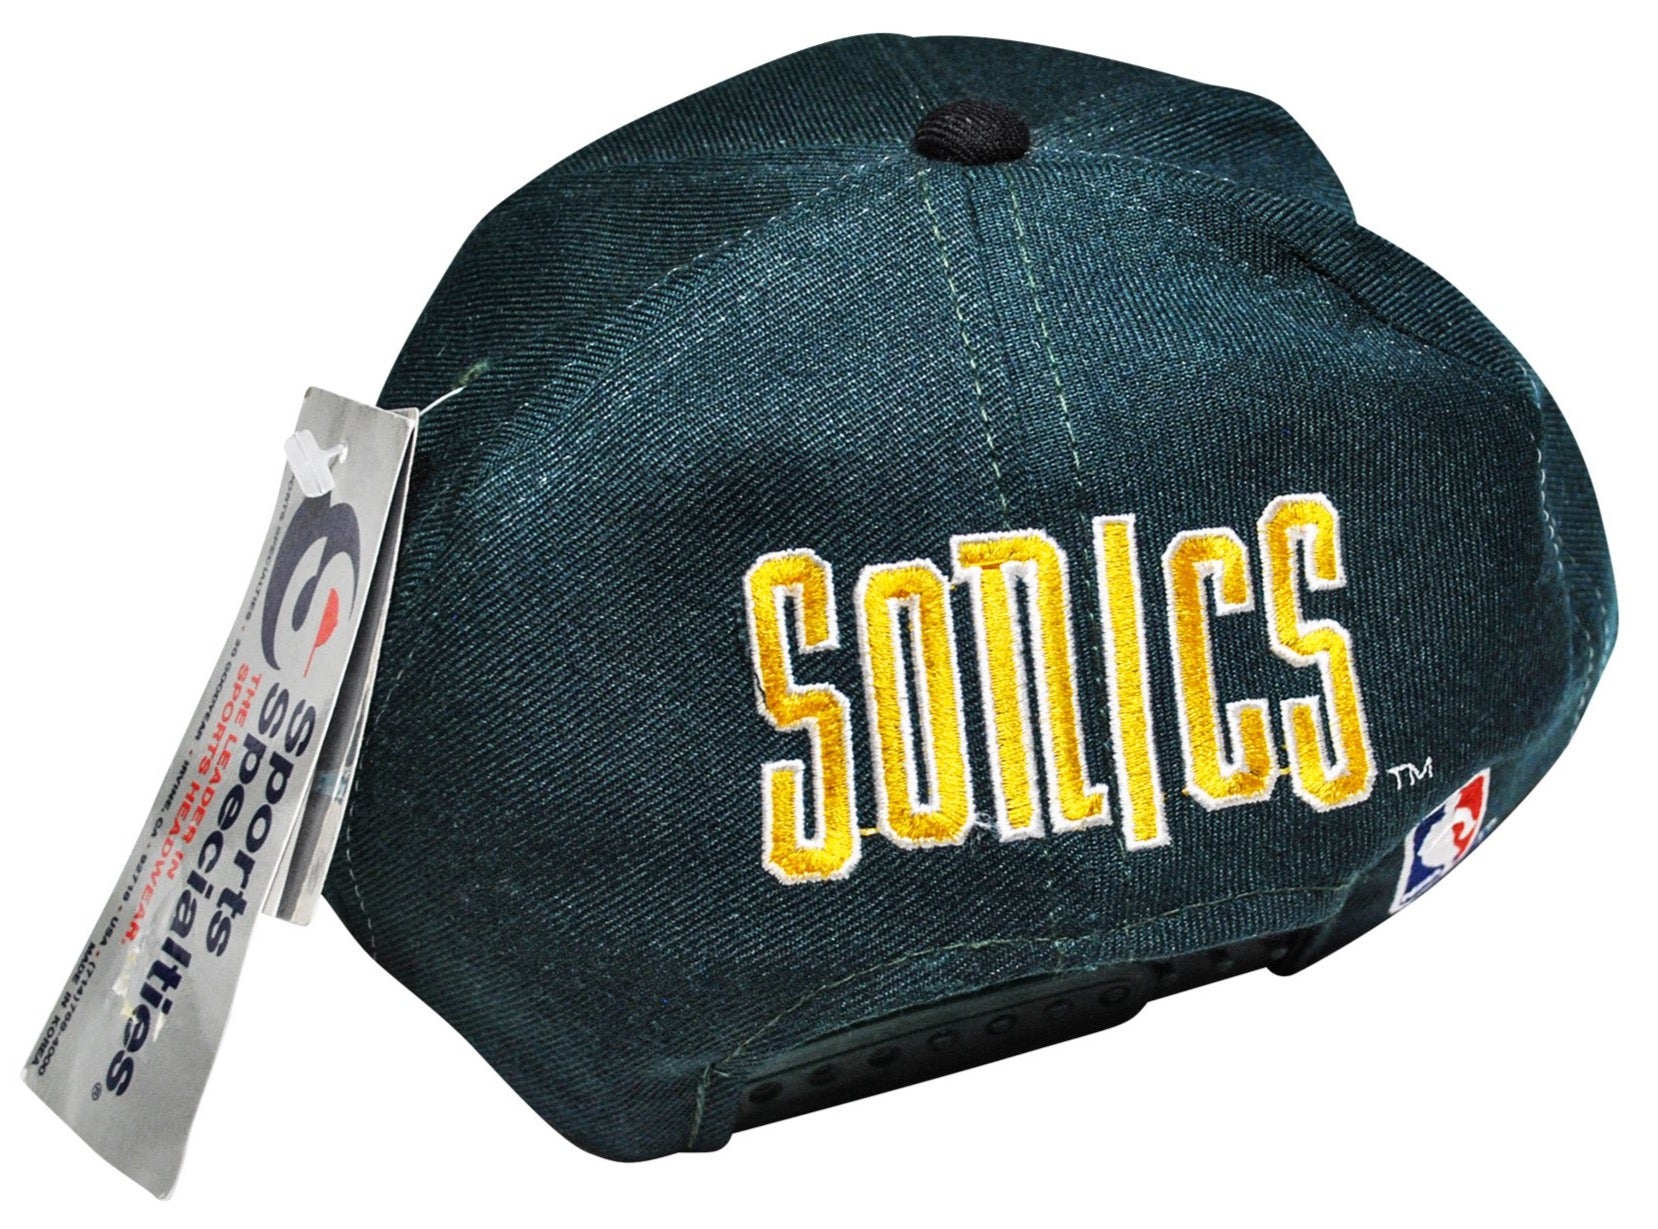 Vintage Seattle SuperSonics Sports Specialties Snapback Hat – Alabama VTG